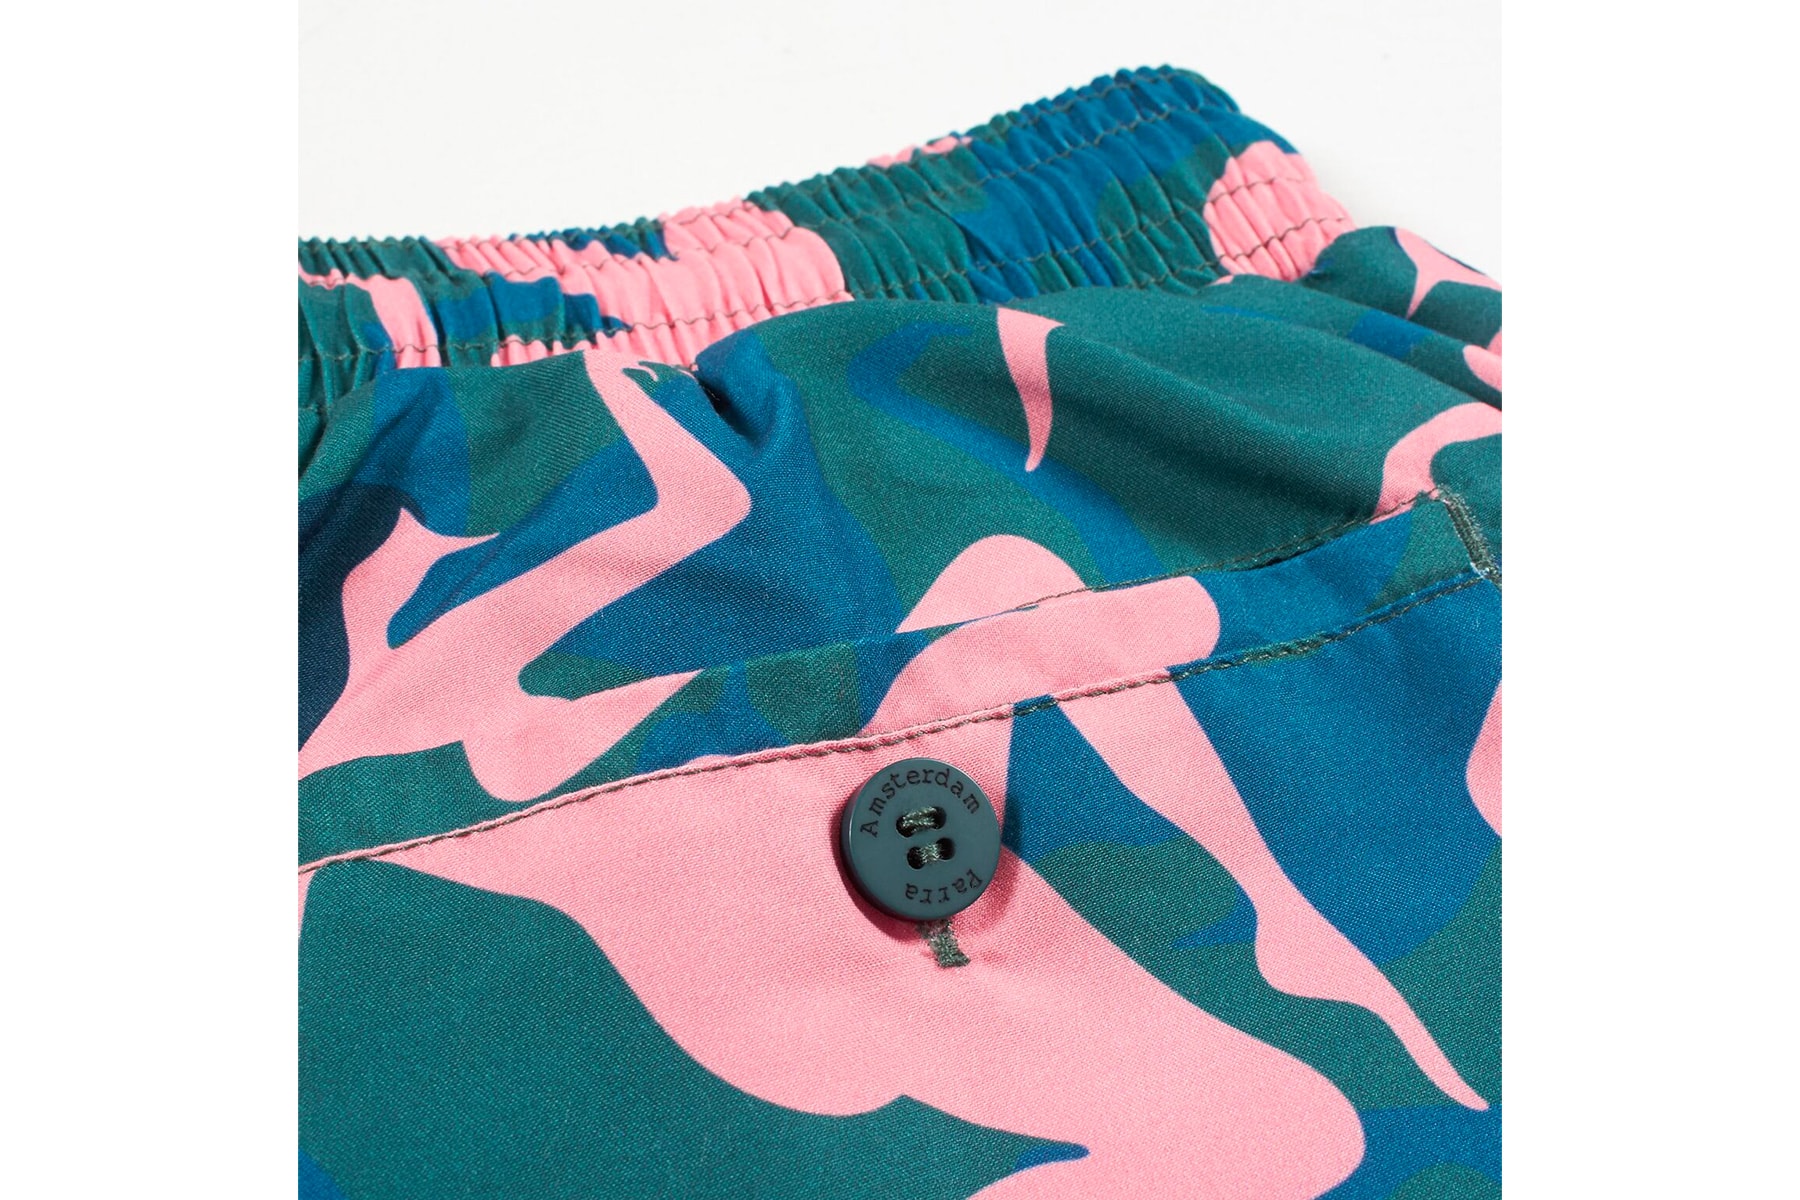 Parra Spring/Summer 2018 Collection Drop 3 & 4 waist pack swim trunks graphic t shirt hoodies caps